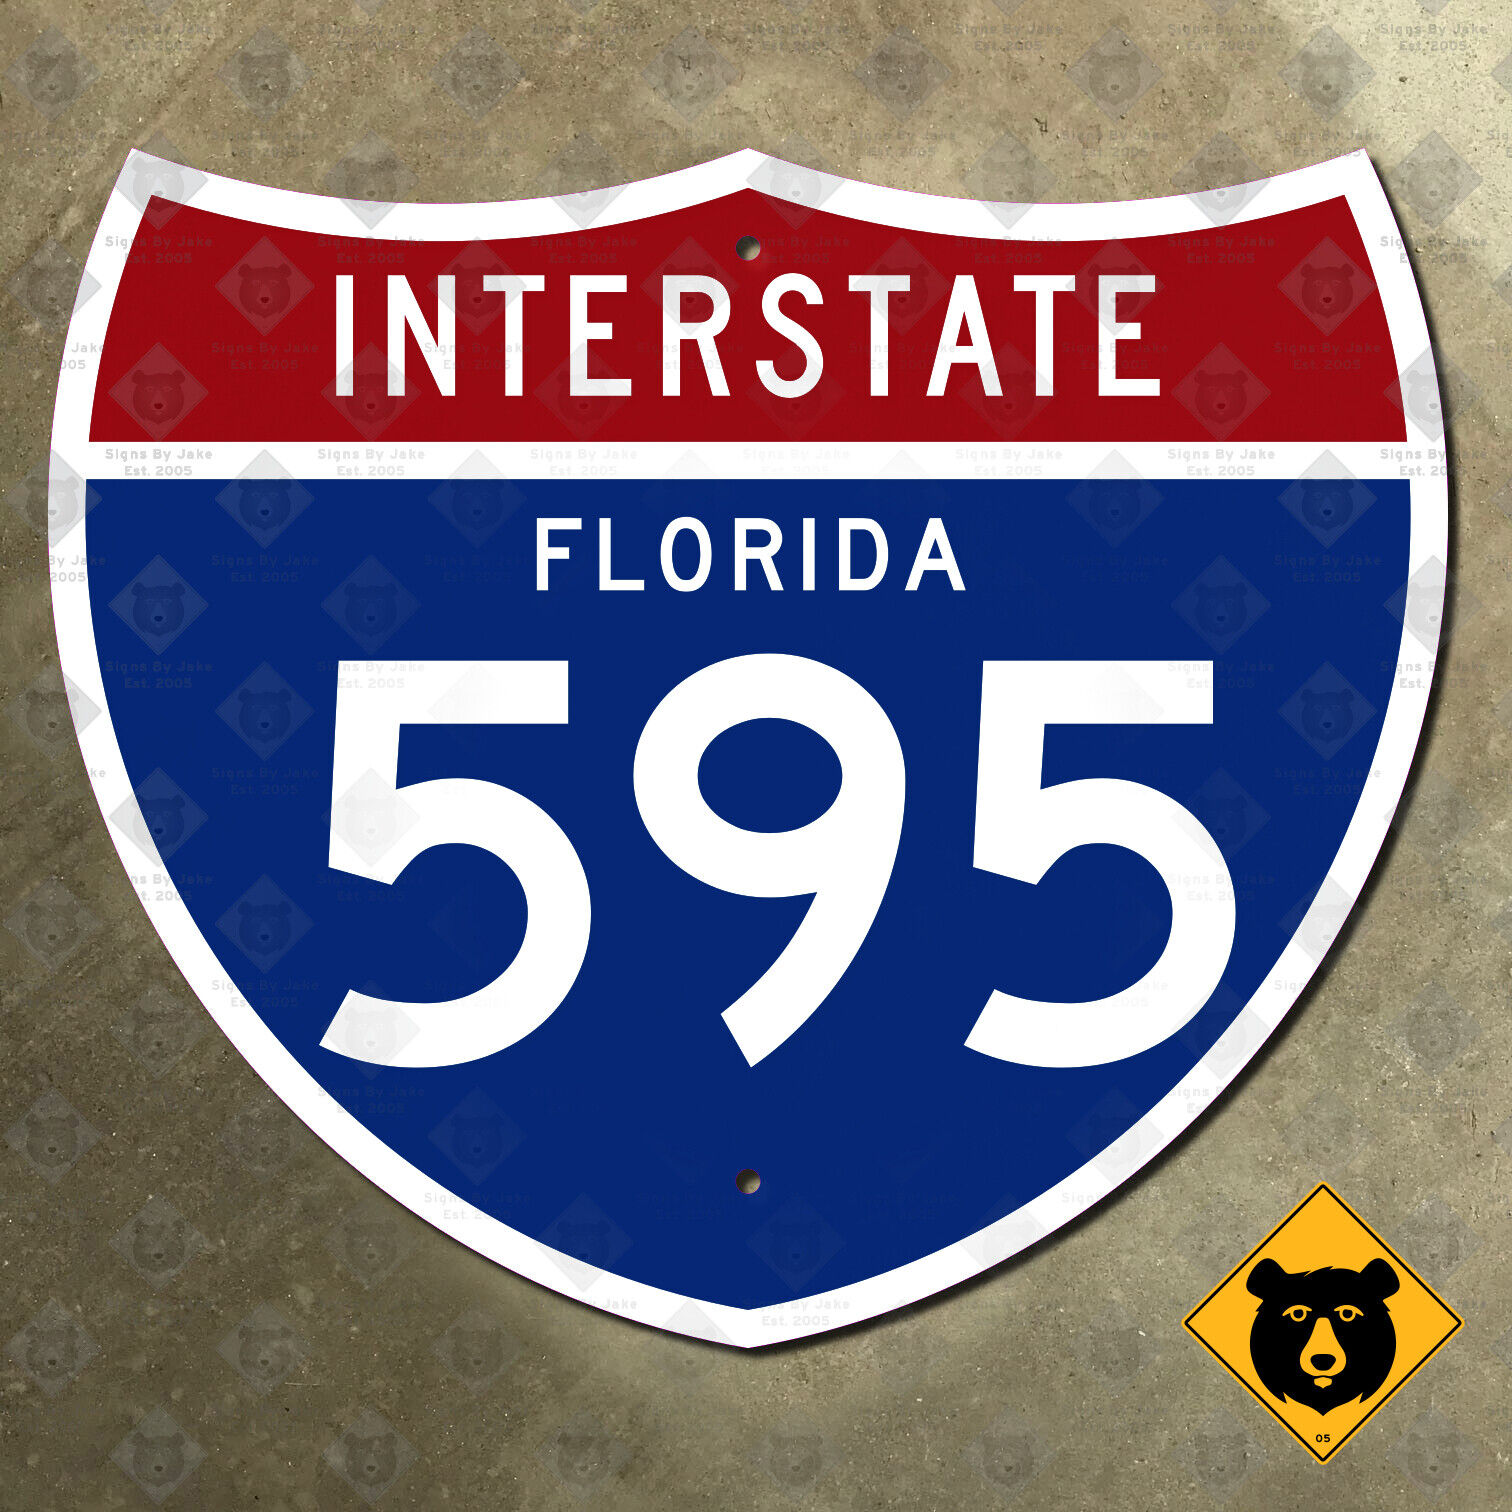 Florida Interstate 595 route marker road sign 1961 Sunrise Fort Lauderdale 21x18